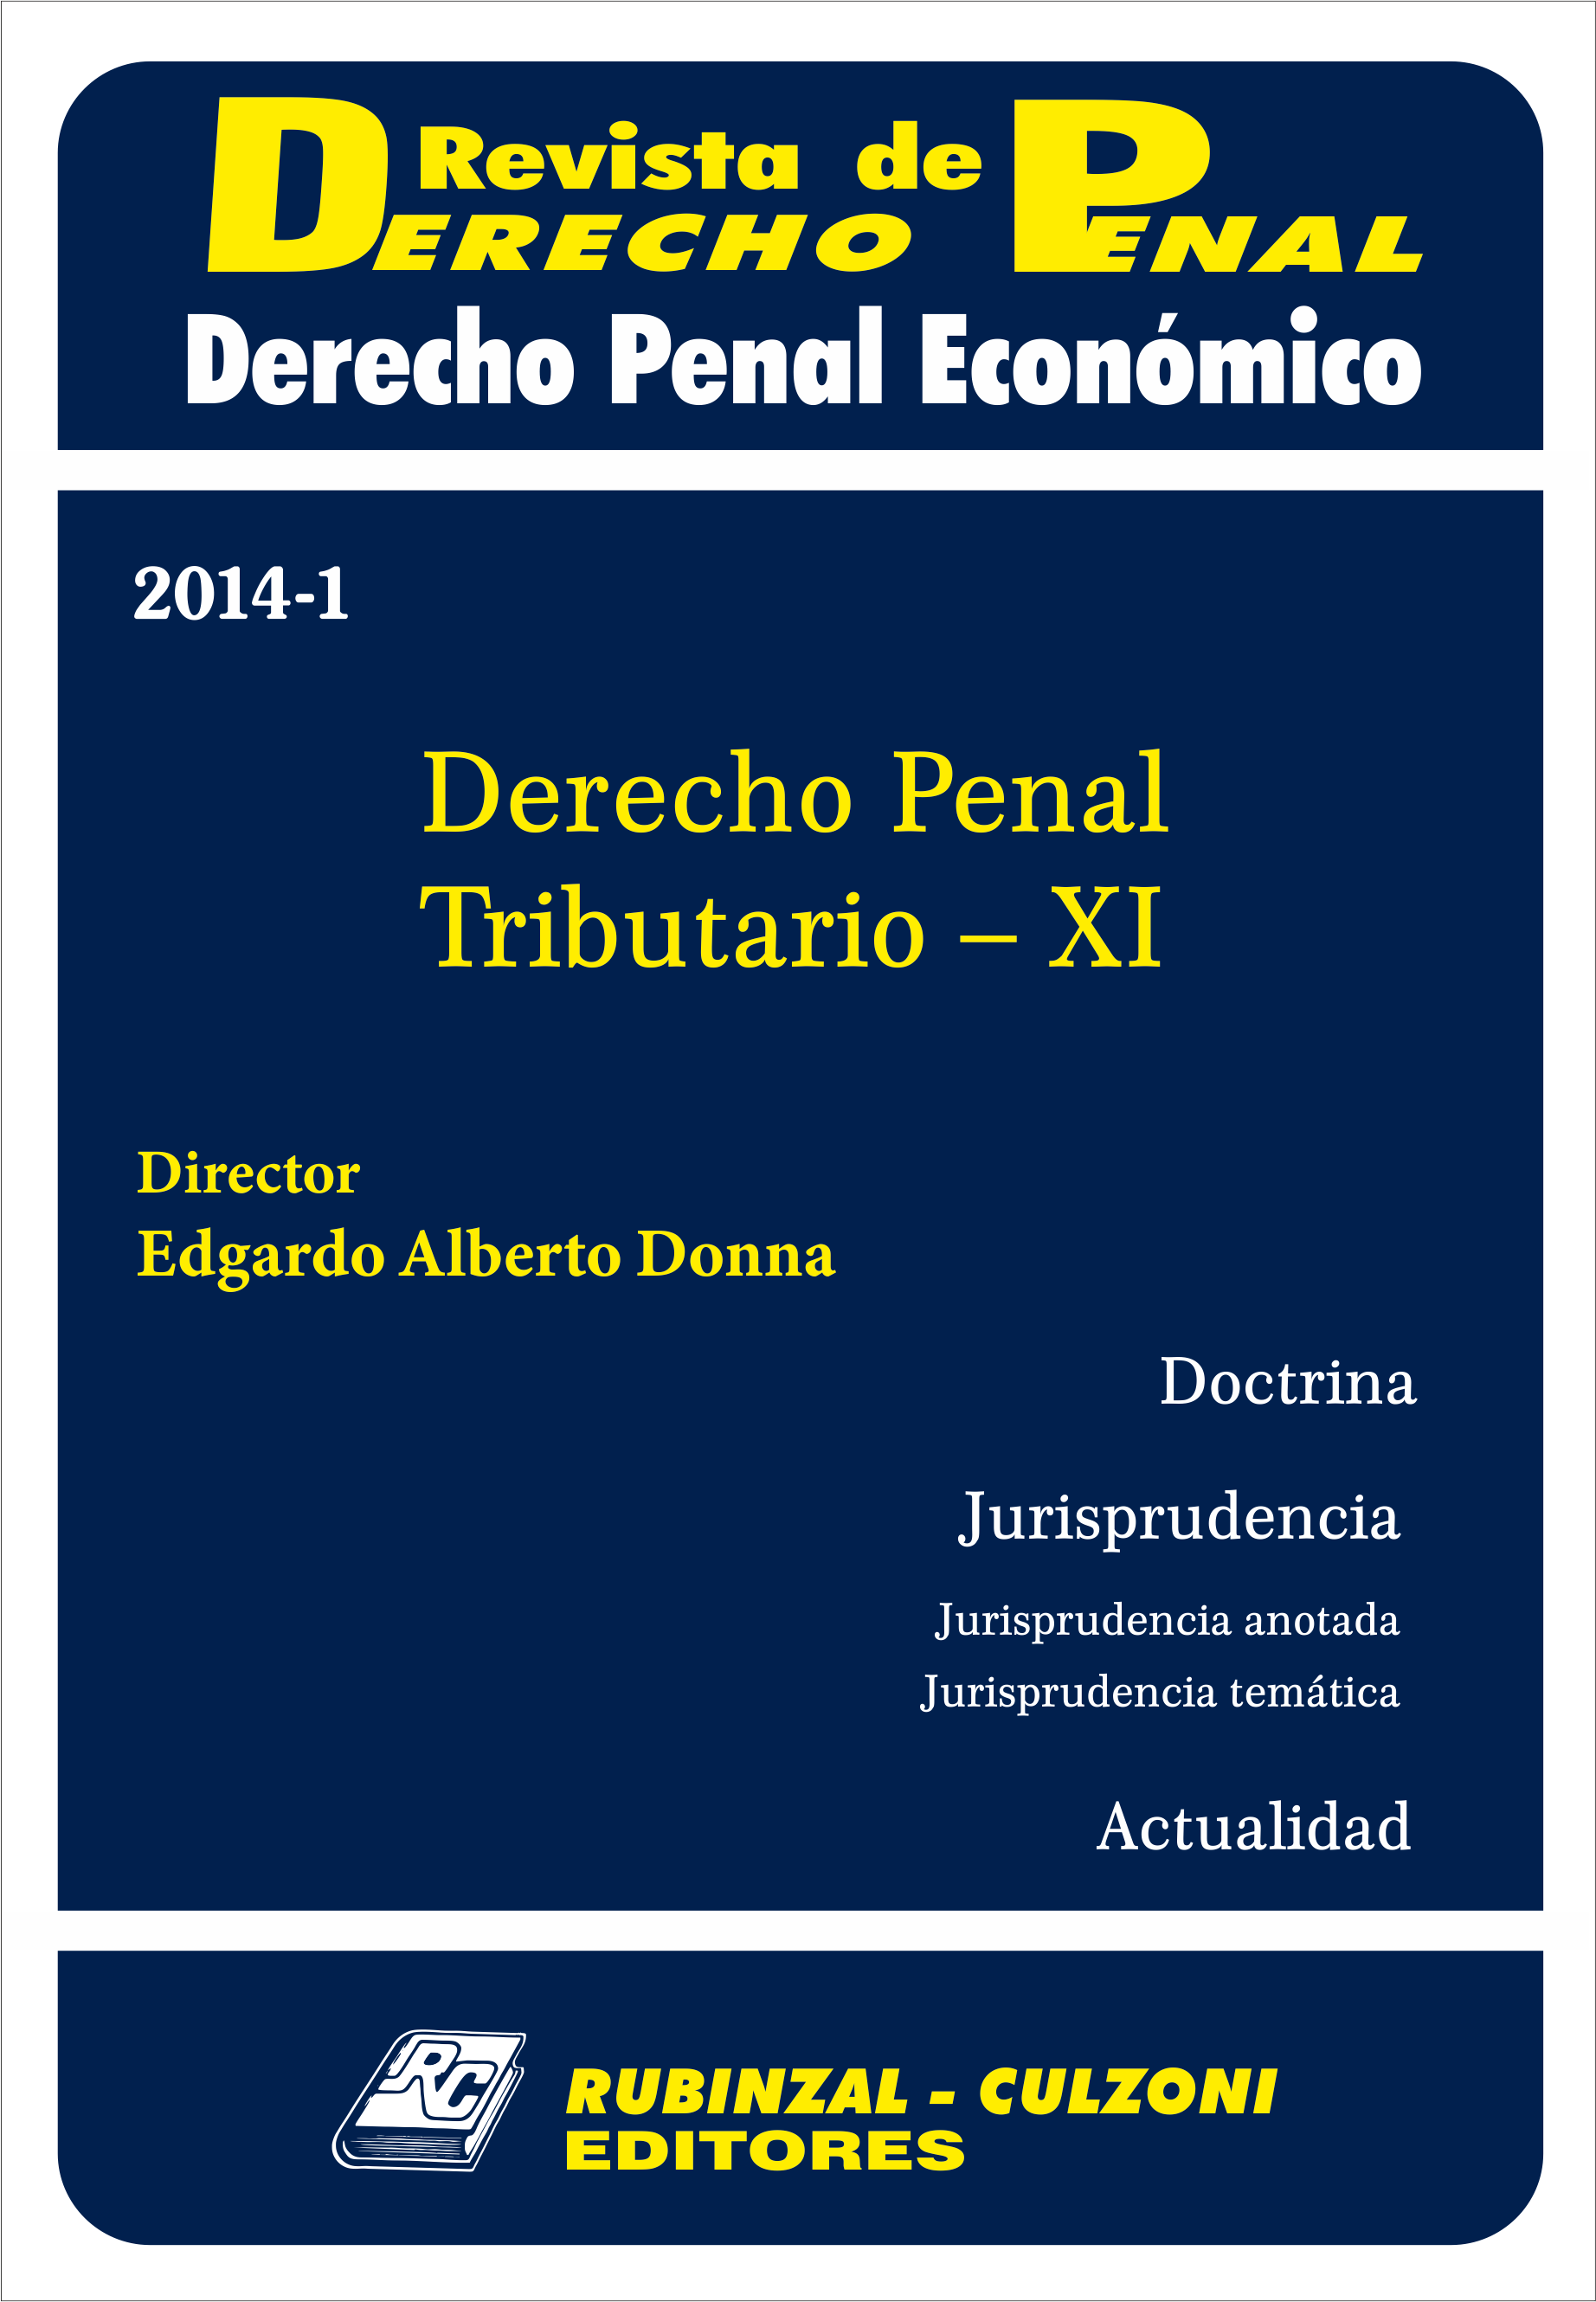 Derecho Penal Tributario - XI. [2014-1]